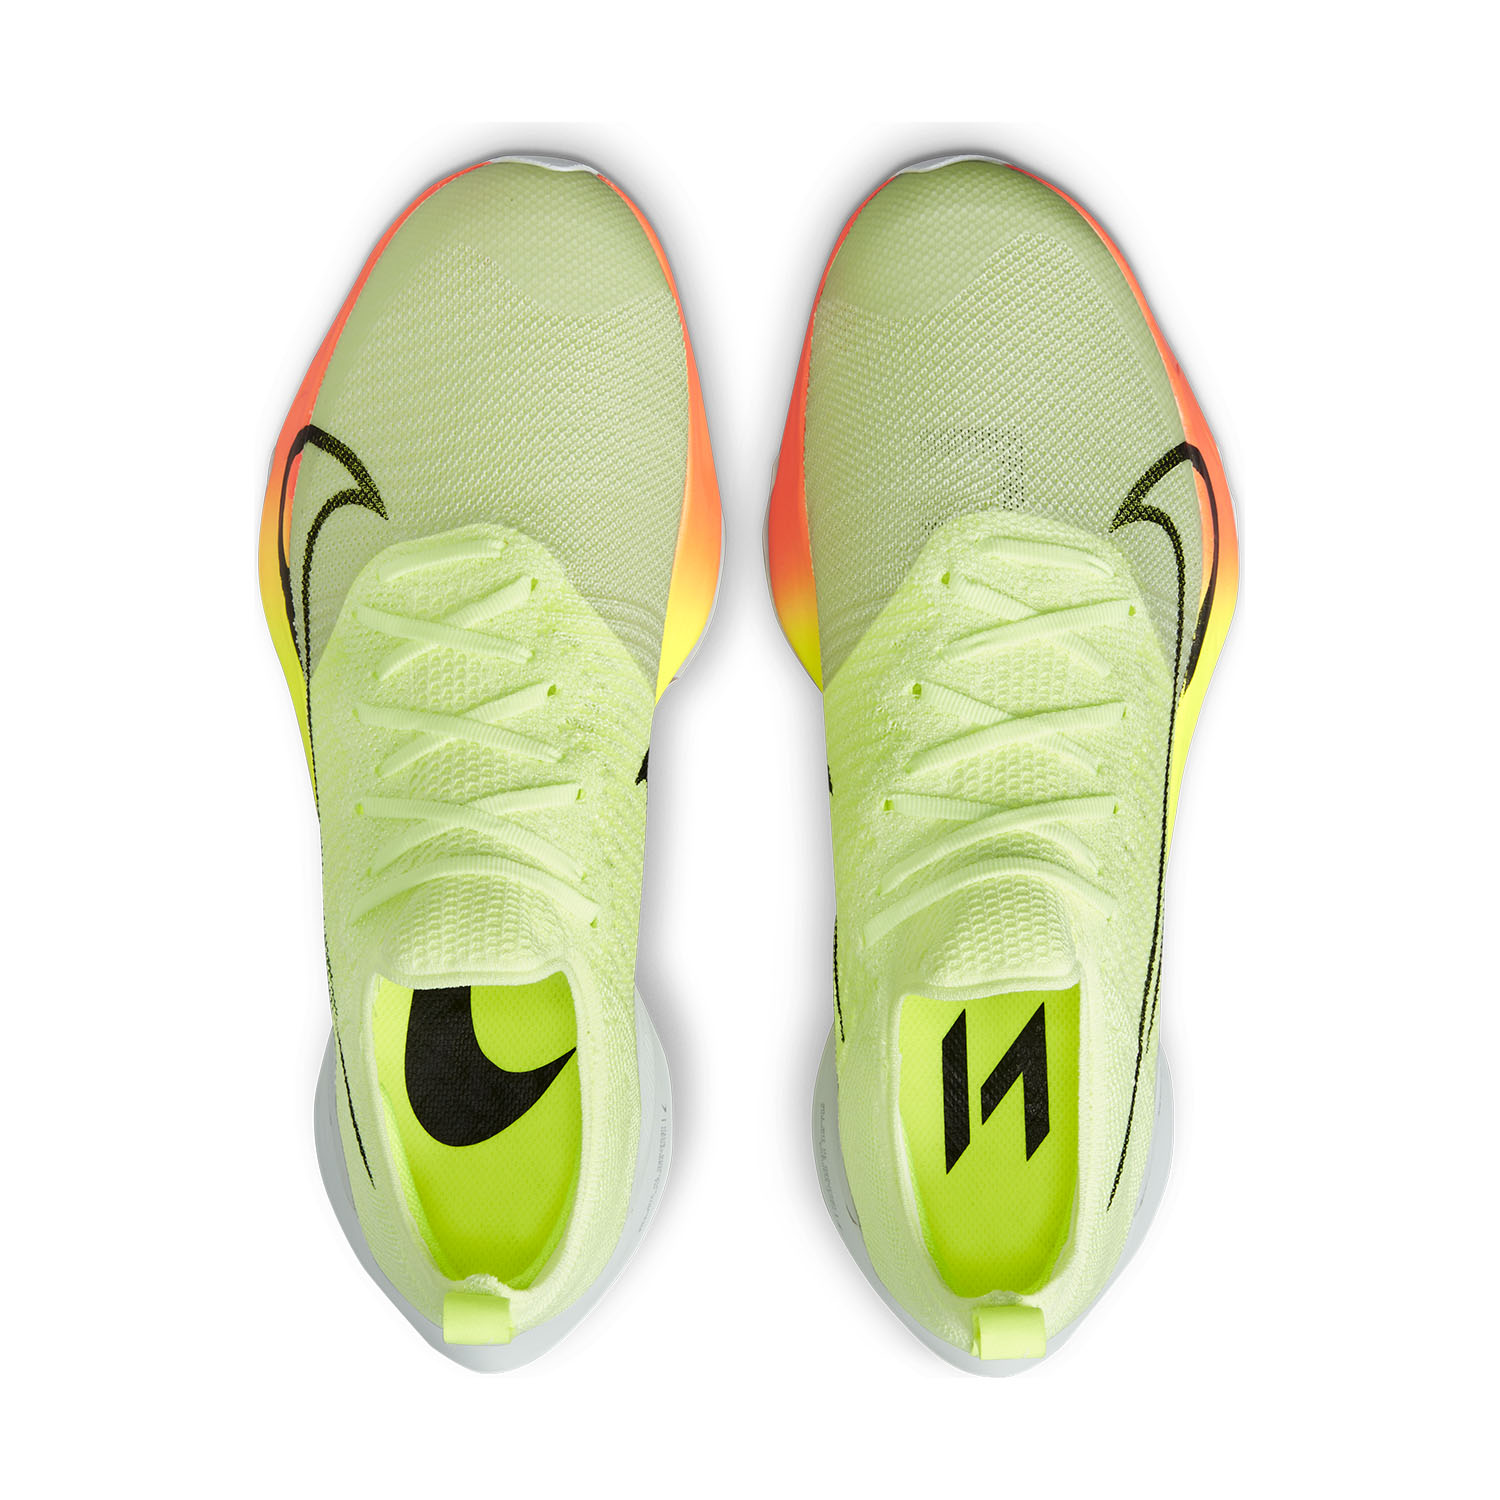 Nike Air Zoom Tempo Next% - Barely Volt/Black/Volt/Hyper Orange